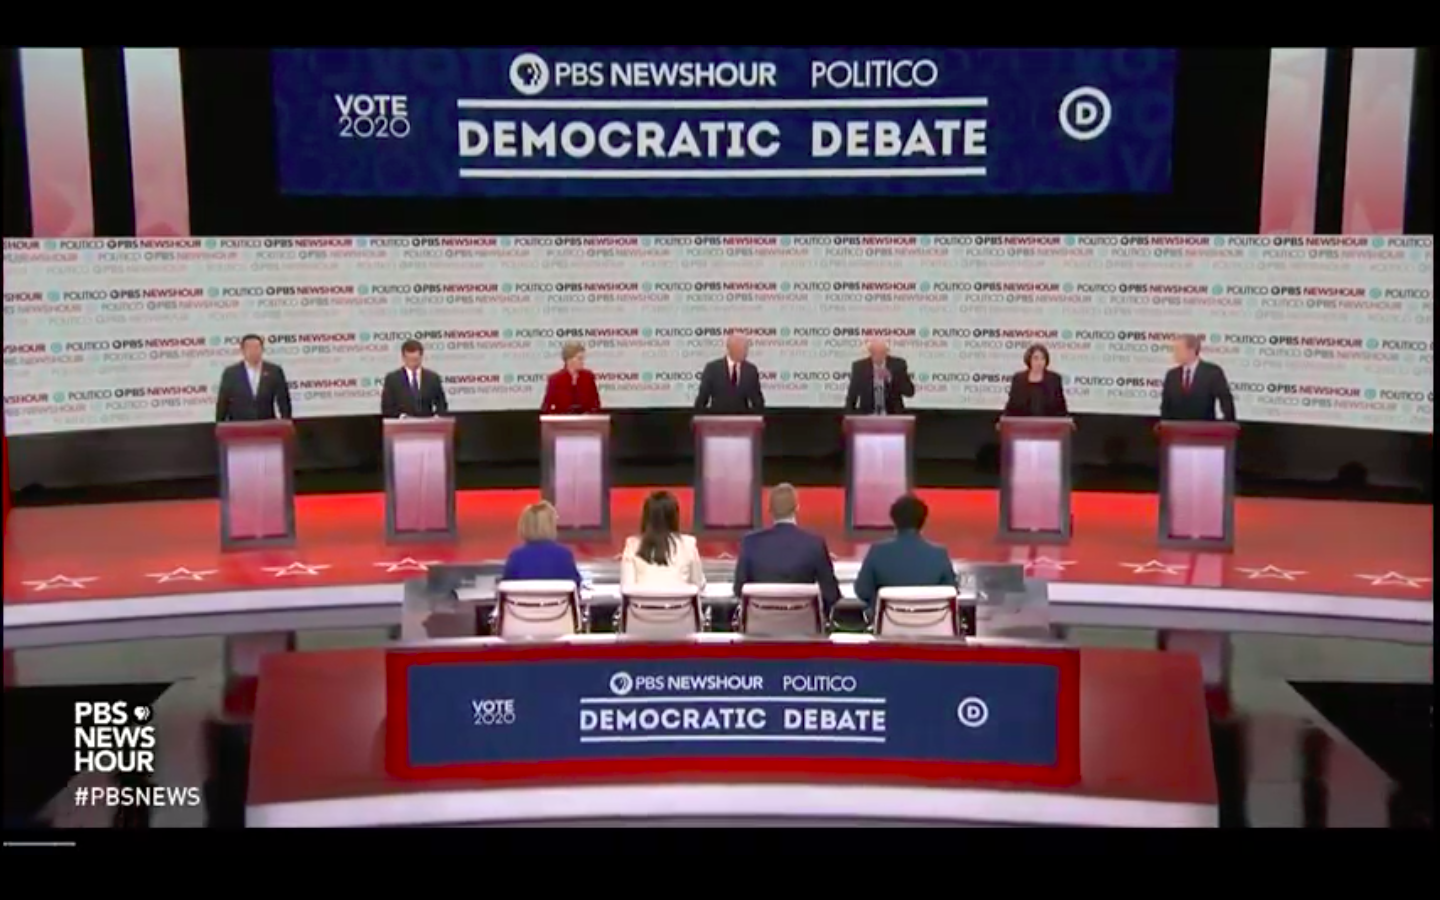 The PBS/Politico Democratic presidential debate